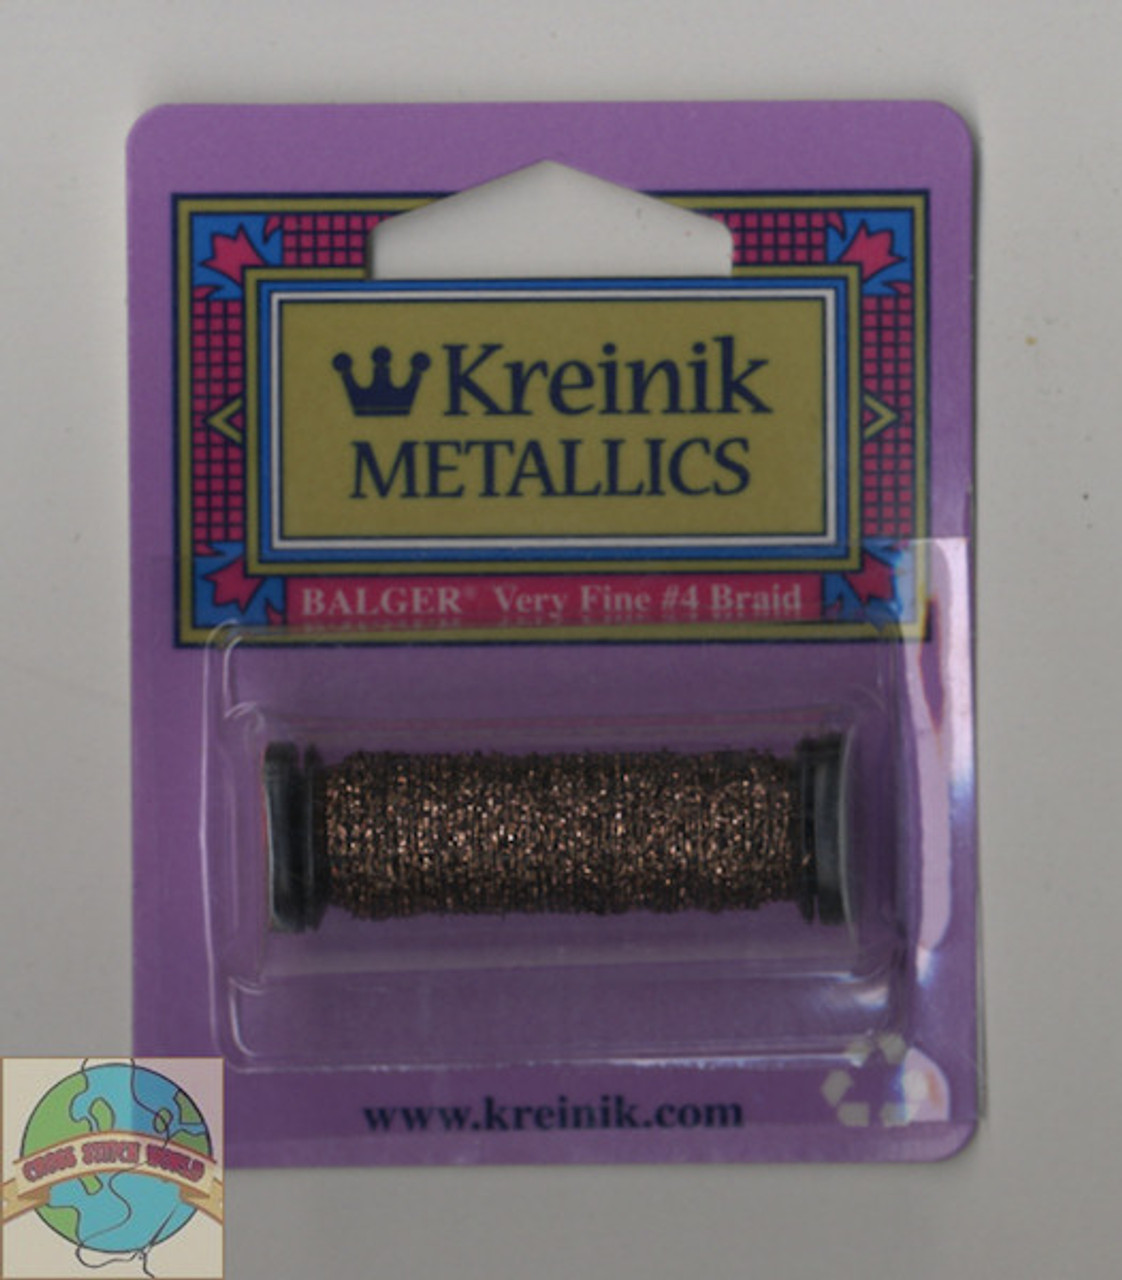 Kreinik Metallics - Very Fine #4 Curry #2122